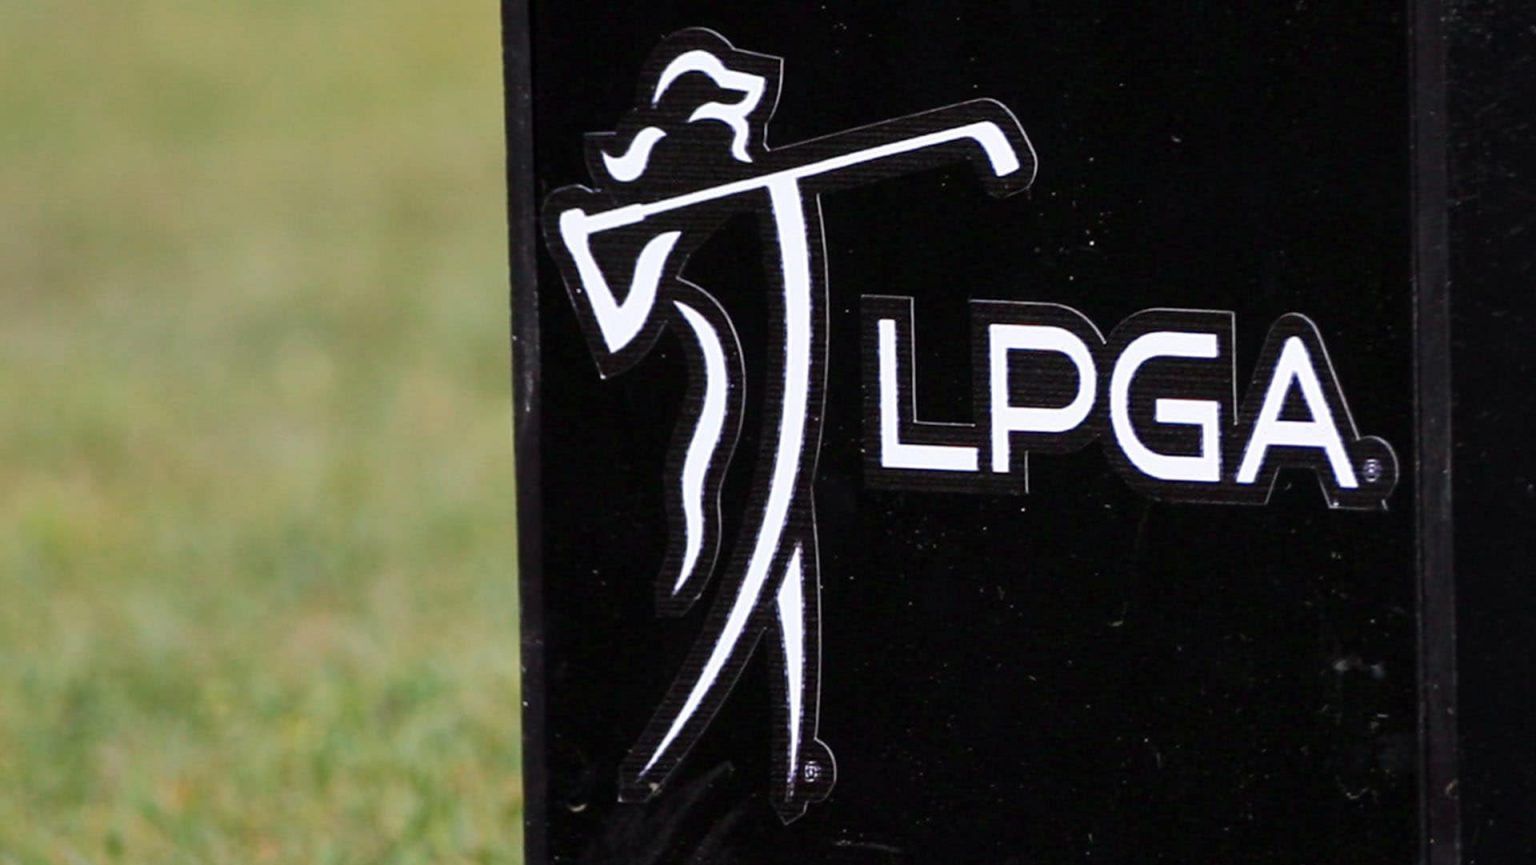 LPGA_1920_logo_teemarker